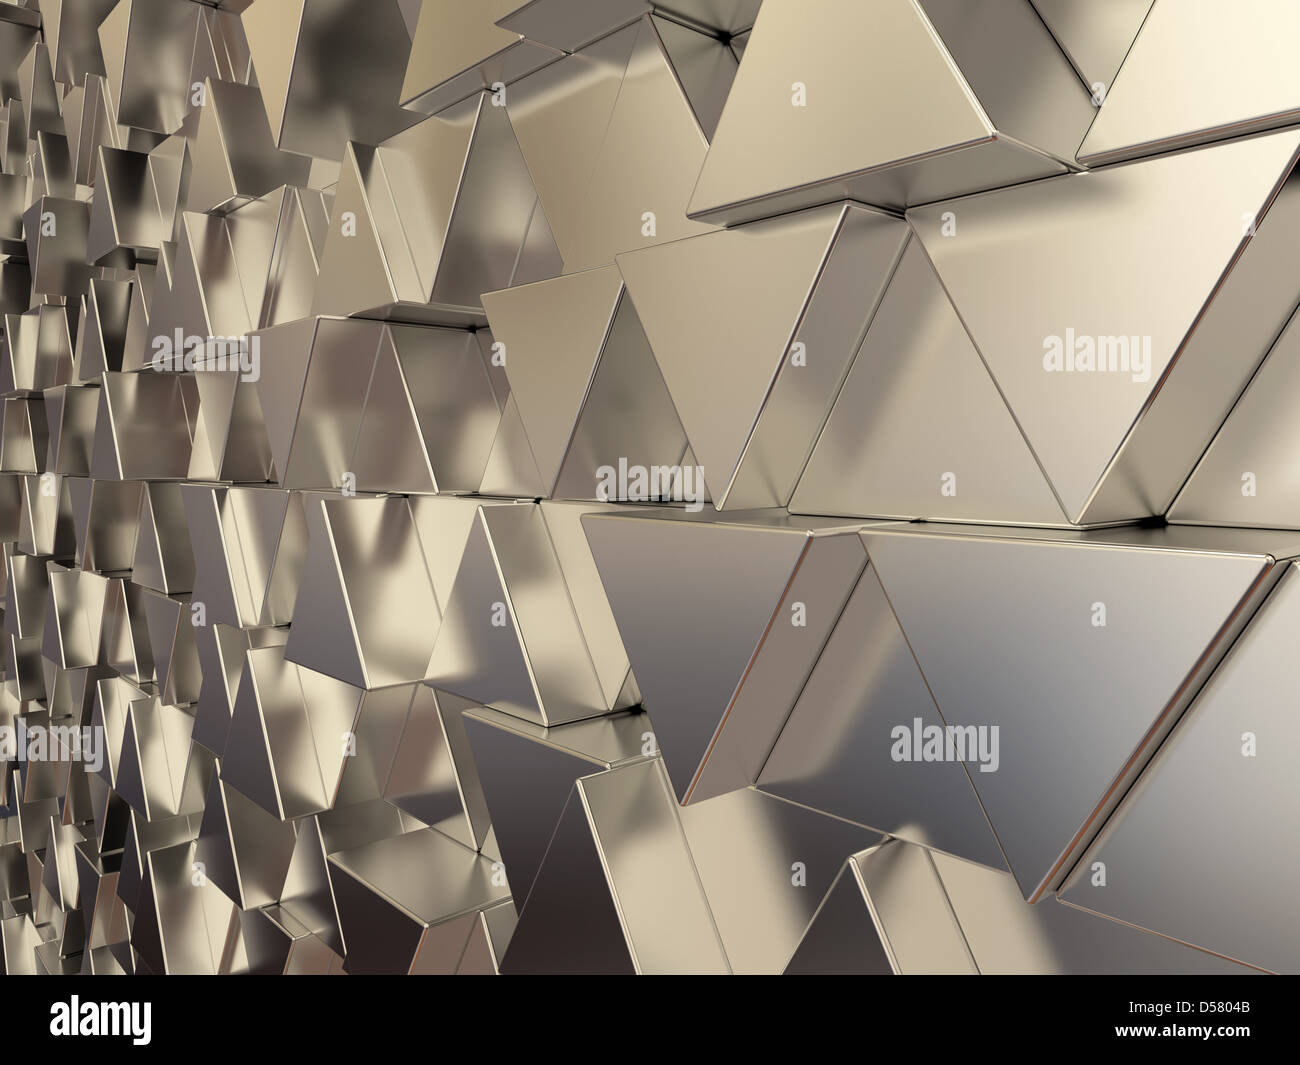 Shiny triangular metal bars abstract background Stock Photo